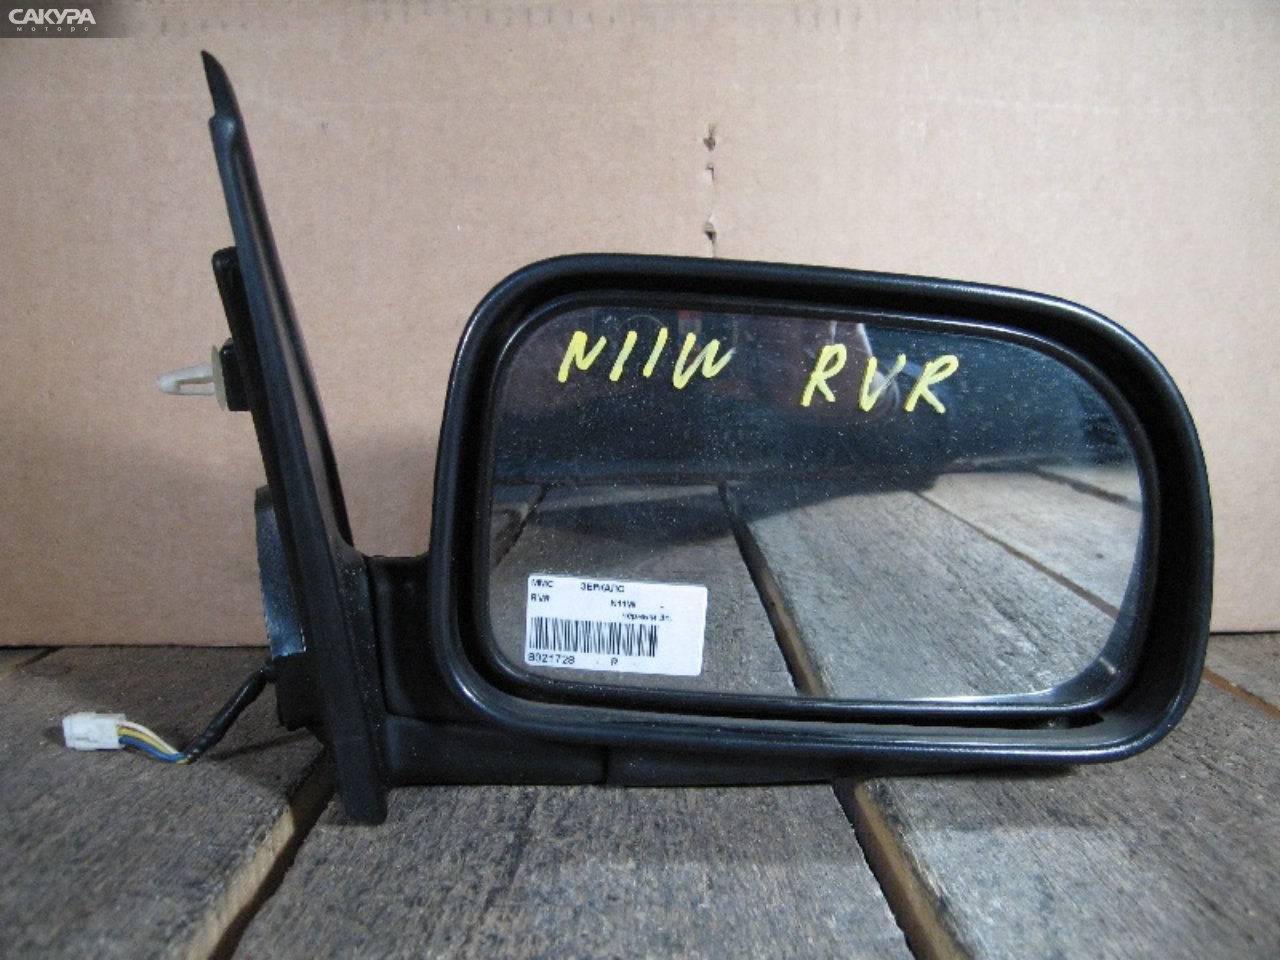 Зеркало боковое правое Mitsubishi RVR N11W: купить в Сакура Абакан.